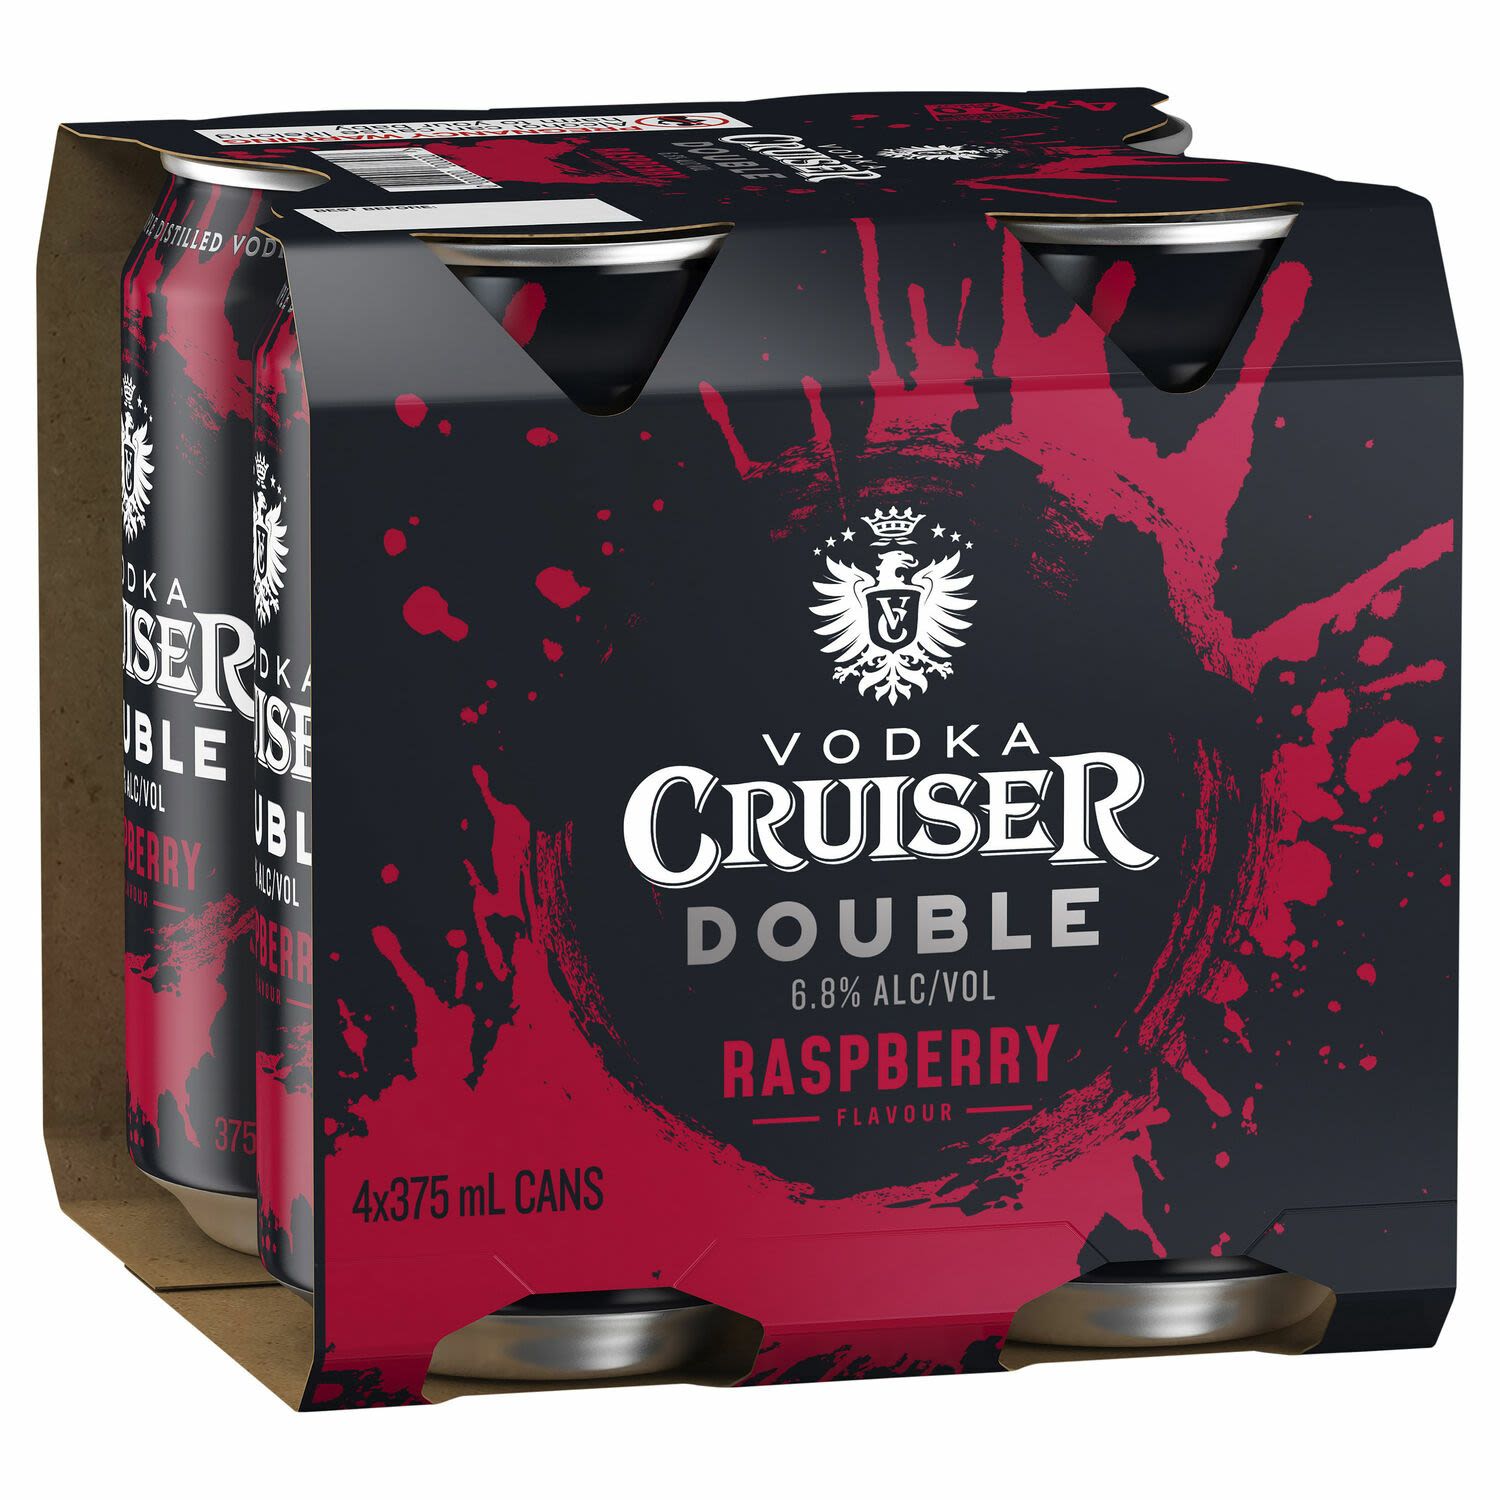 Vodka Cruiser Double Raspberry 6.8% Can 375mL 4 Pack